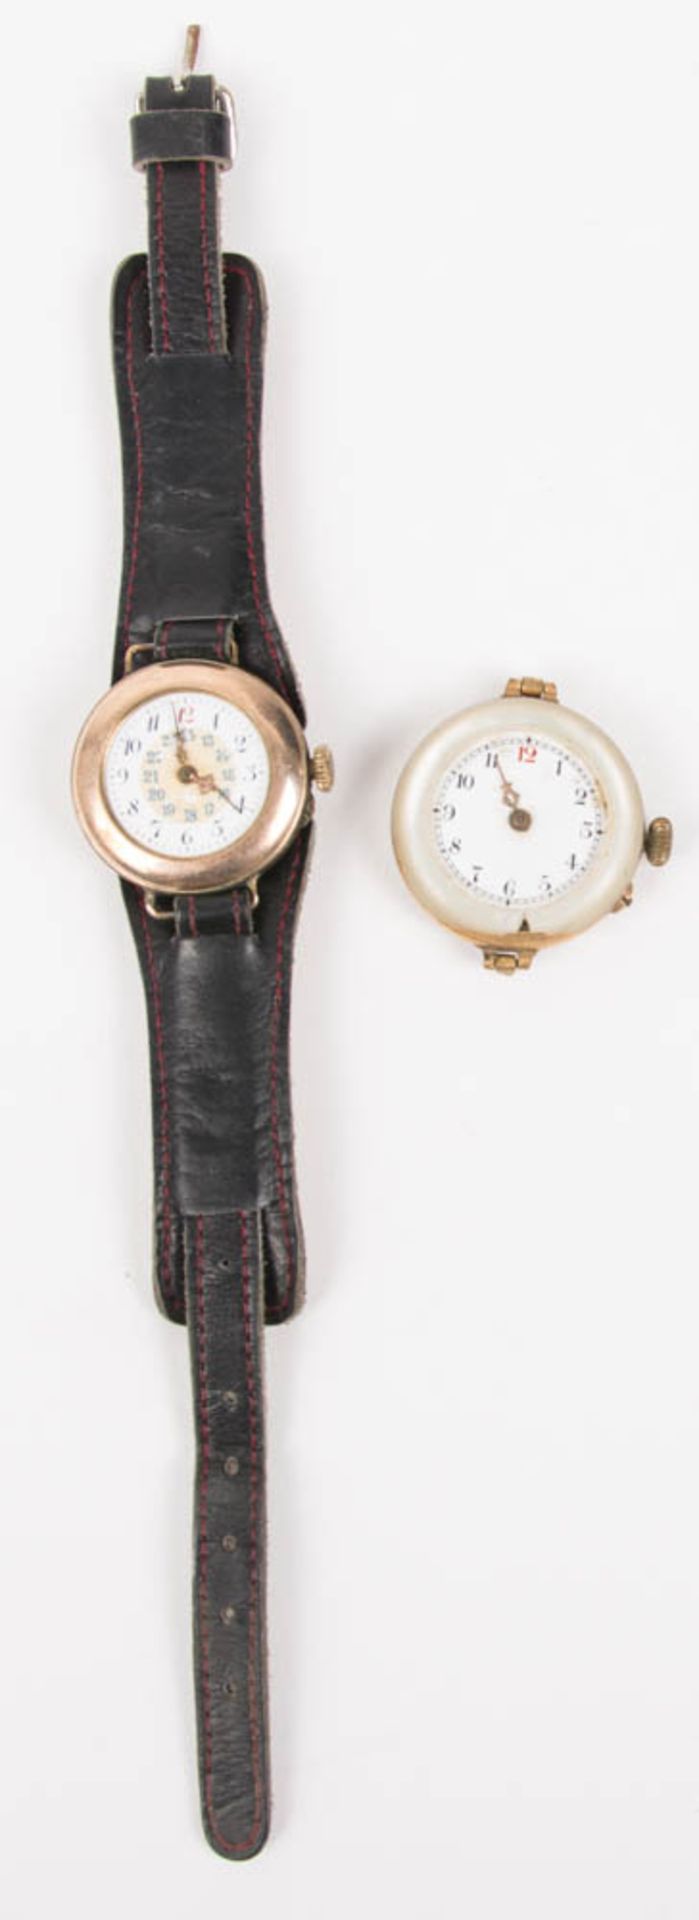 Zwei historische Armbanduhren 19./20. Jh.